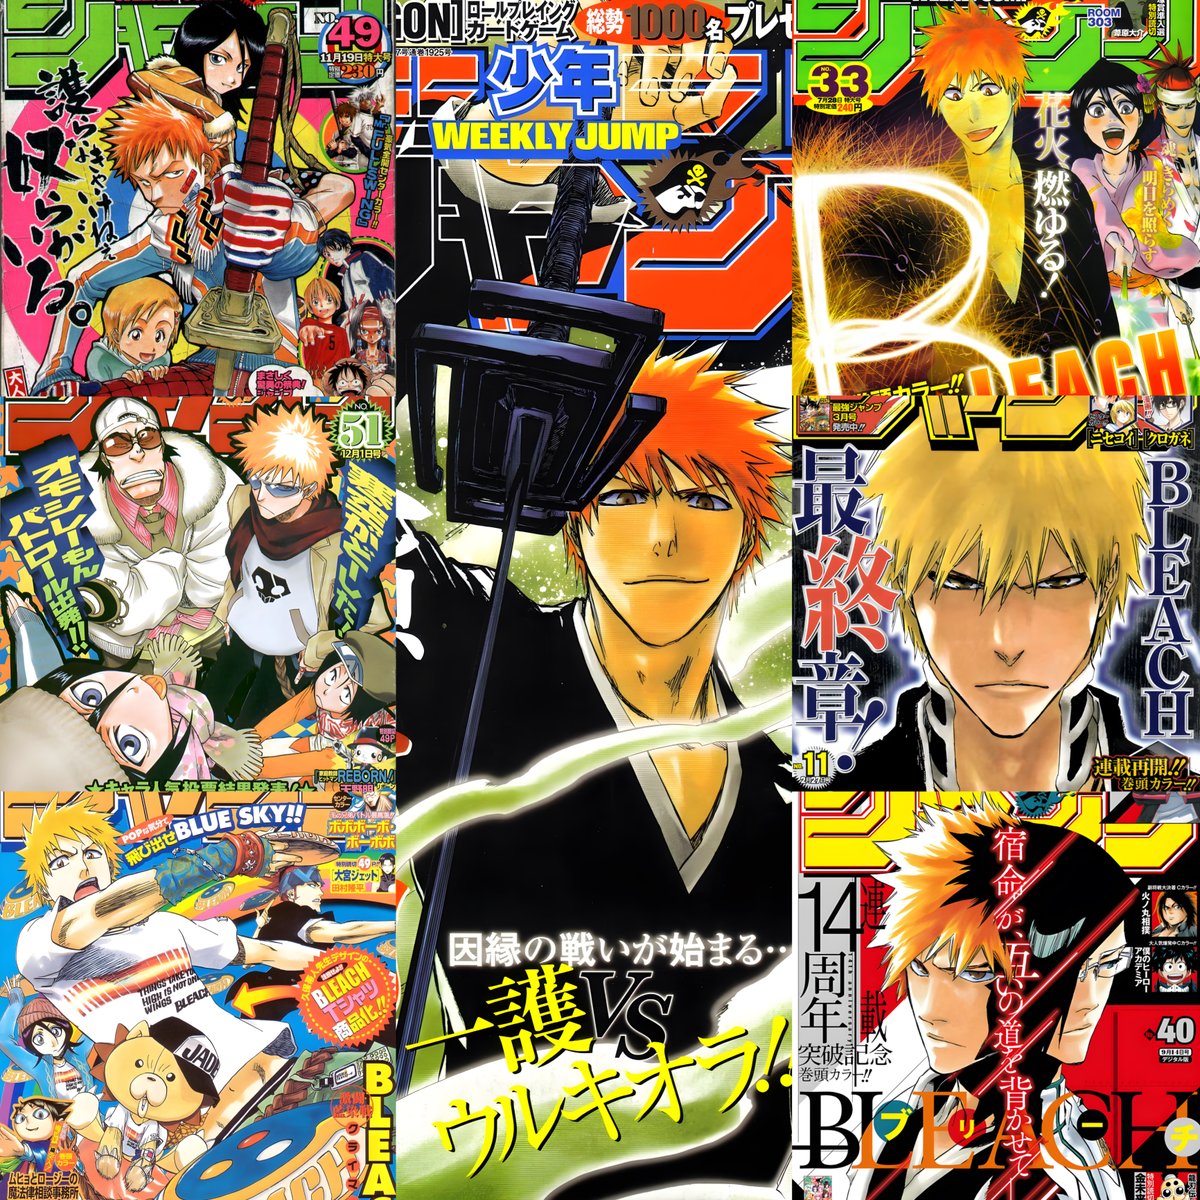 [A Thread 🧵] [0/37]

All BLEACH Weekly Shonen Jump Covers (Include the group covers)

-High Quality Scans

#BLEACH #BLEACH_anime #ジャンプ #BLEACHTYBW #BLEACH千年血戦篇 #anime #manga